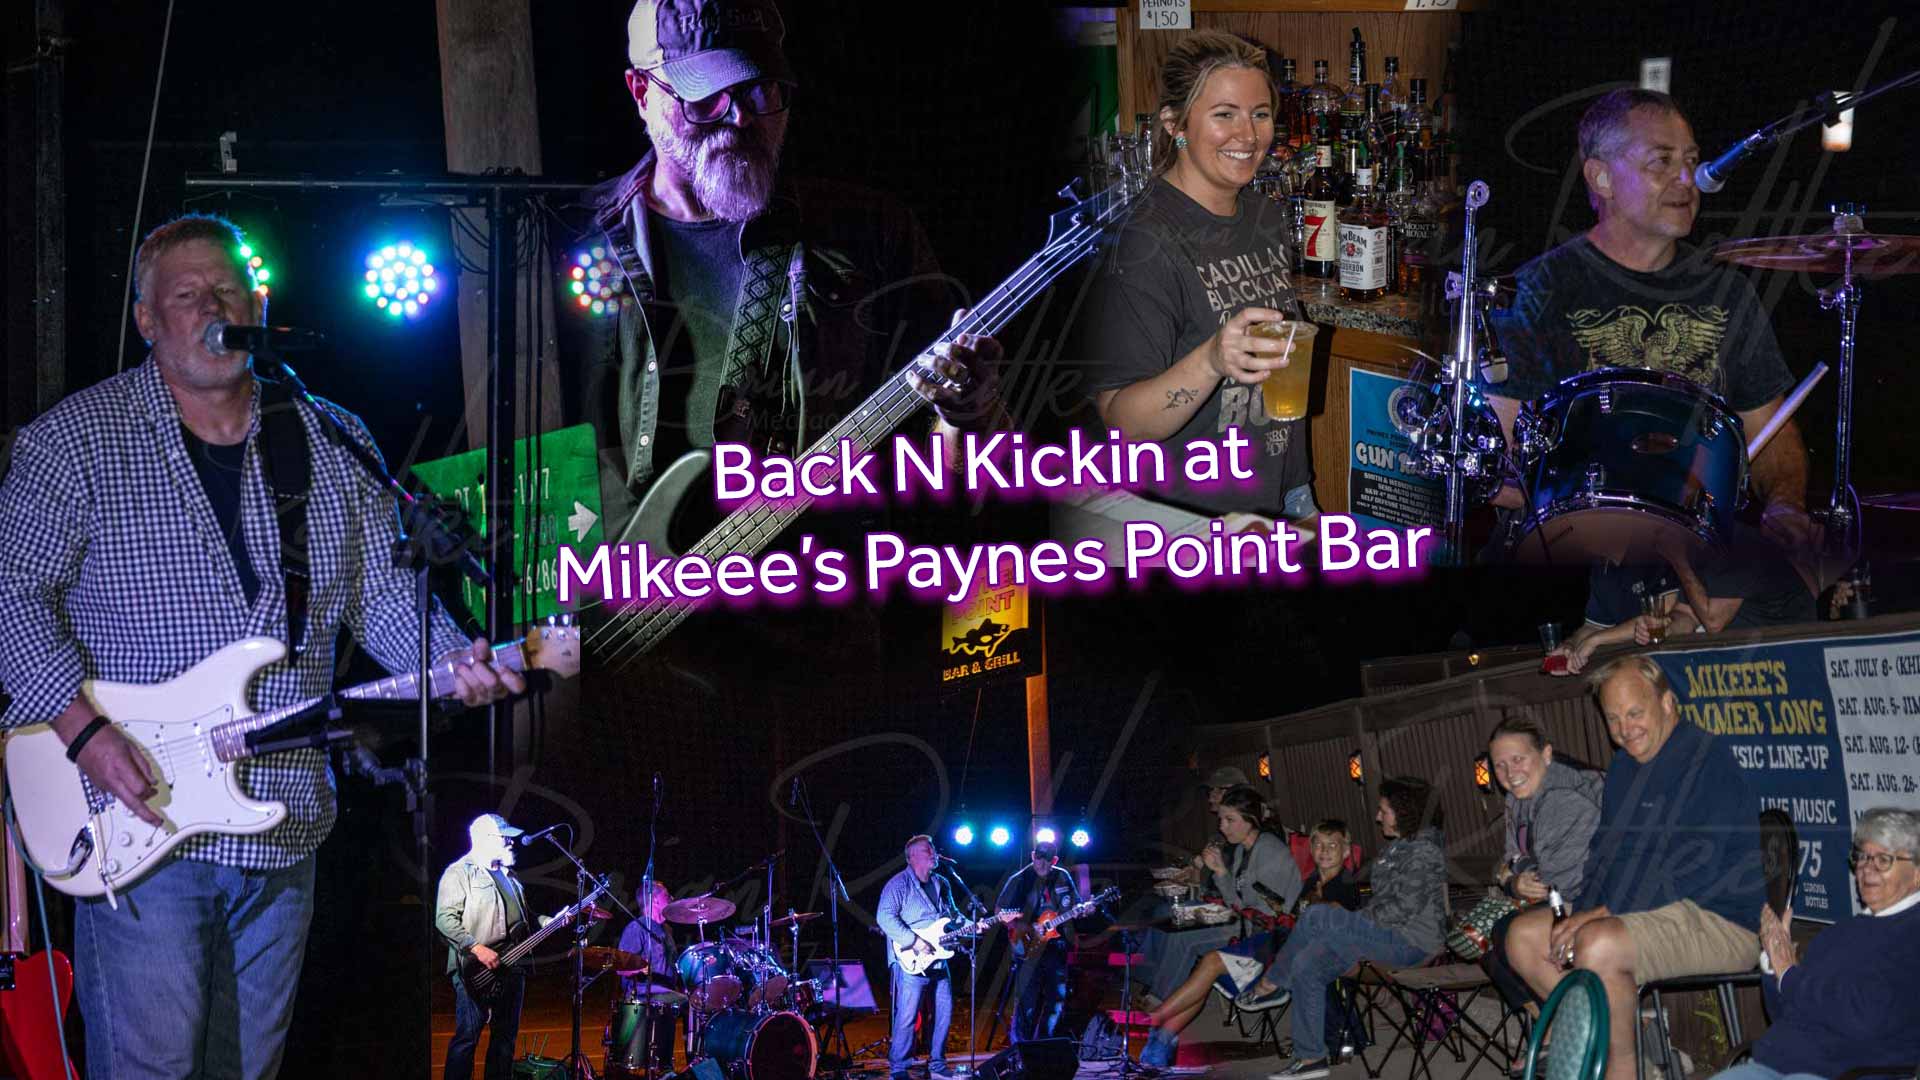 Back N Kickin at Mikeee's Payne Point bar in Neenah WI